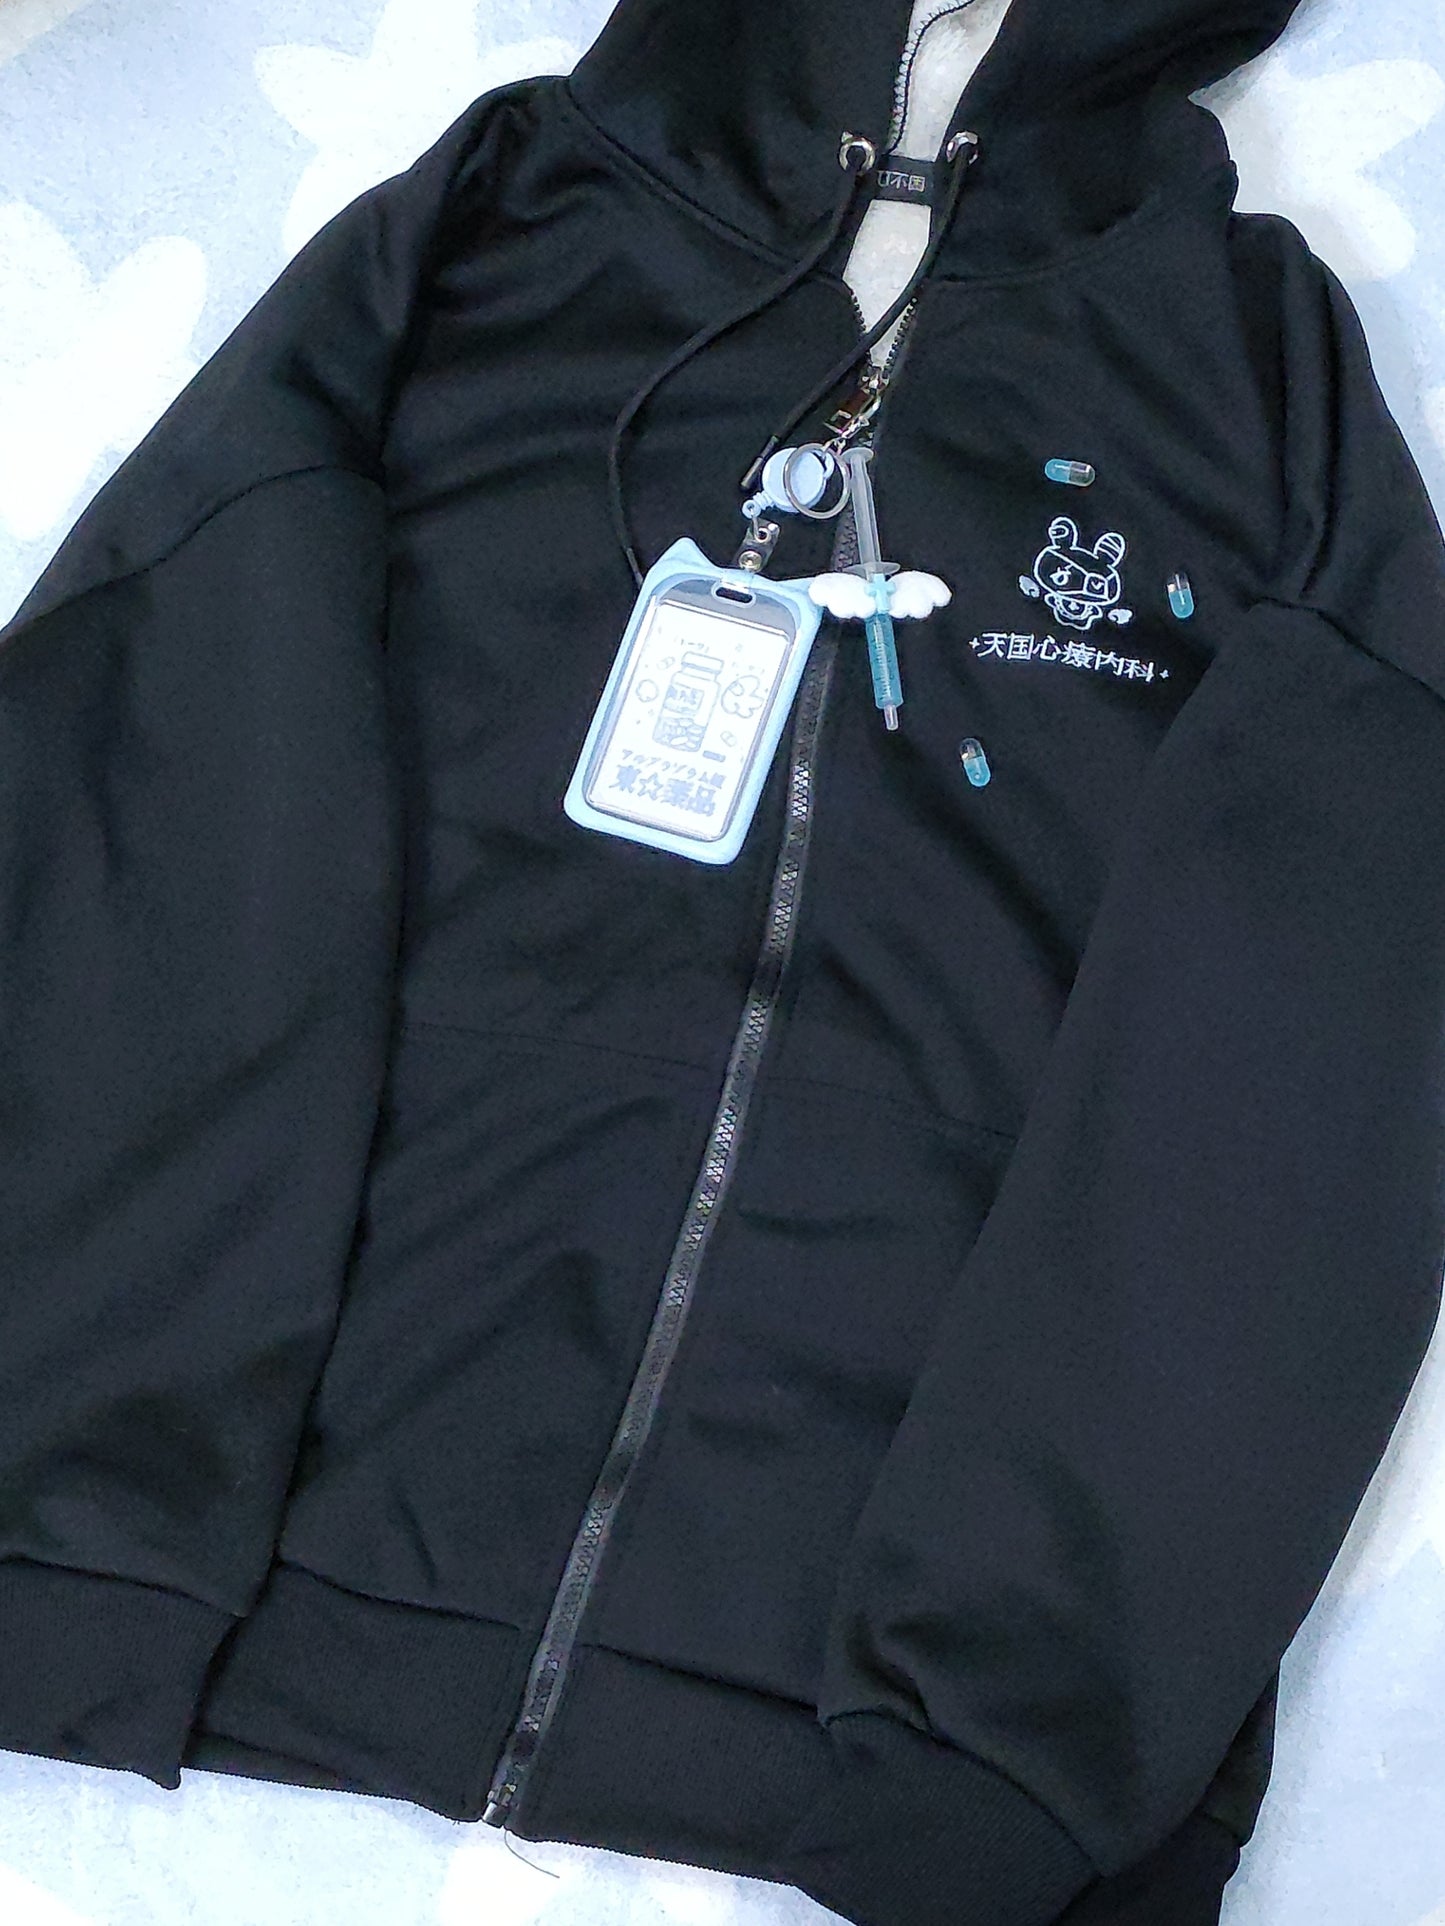 Jirai Kei Fleece Hoodie Black Gray Embroidery Winter Coat 32928:408788